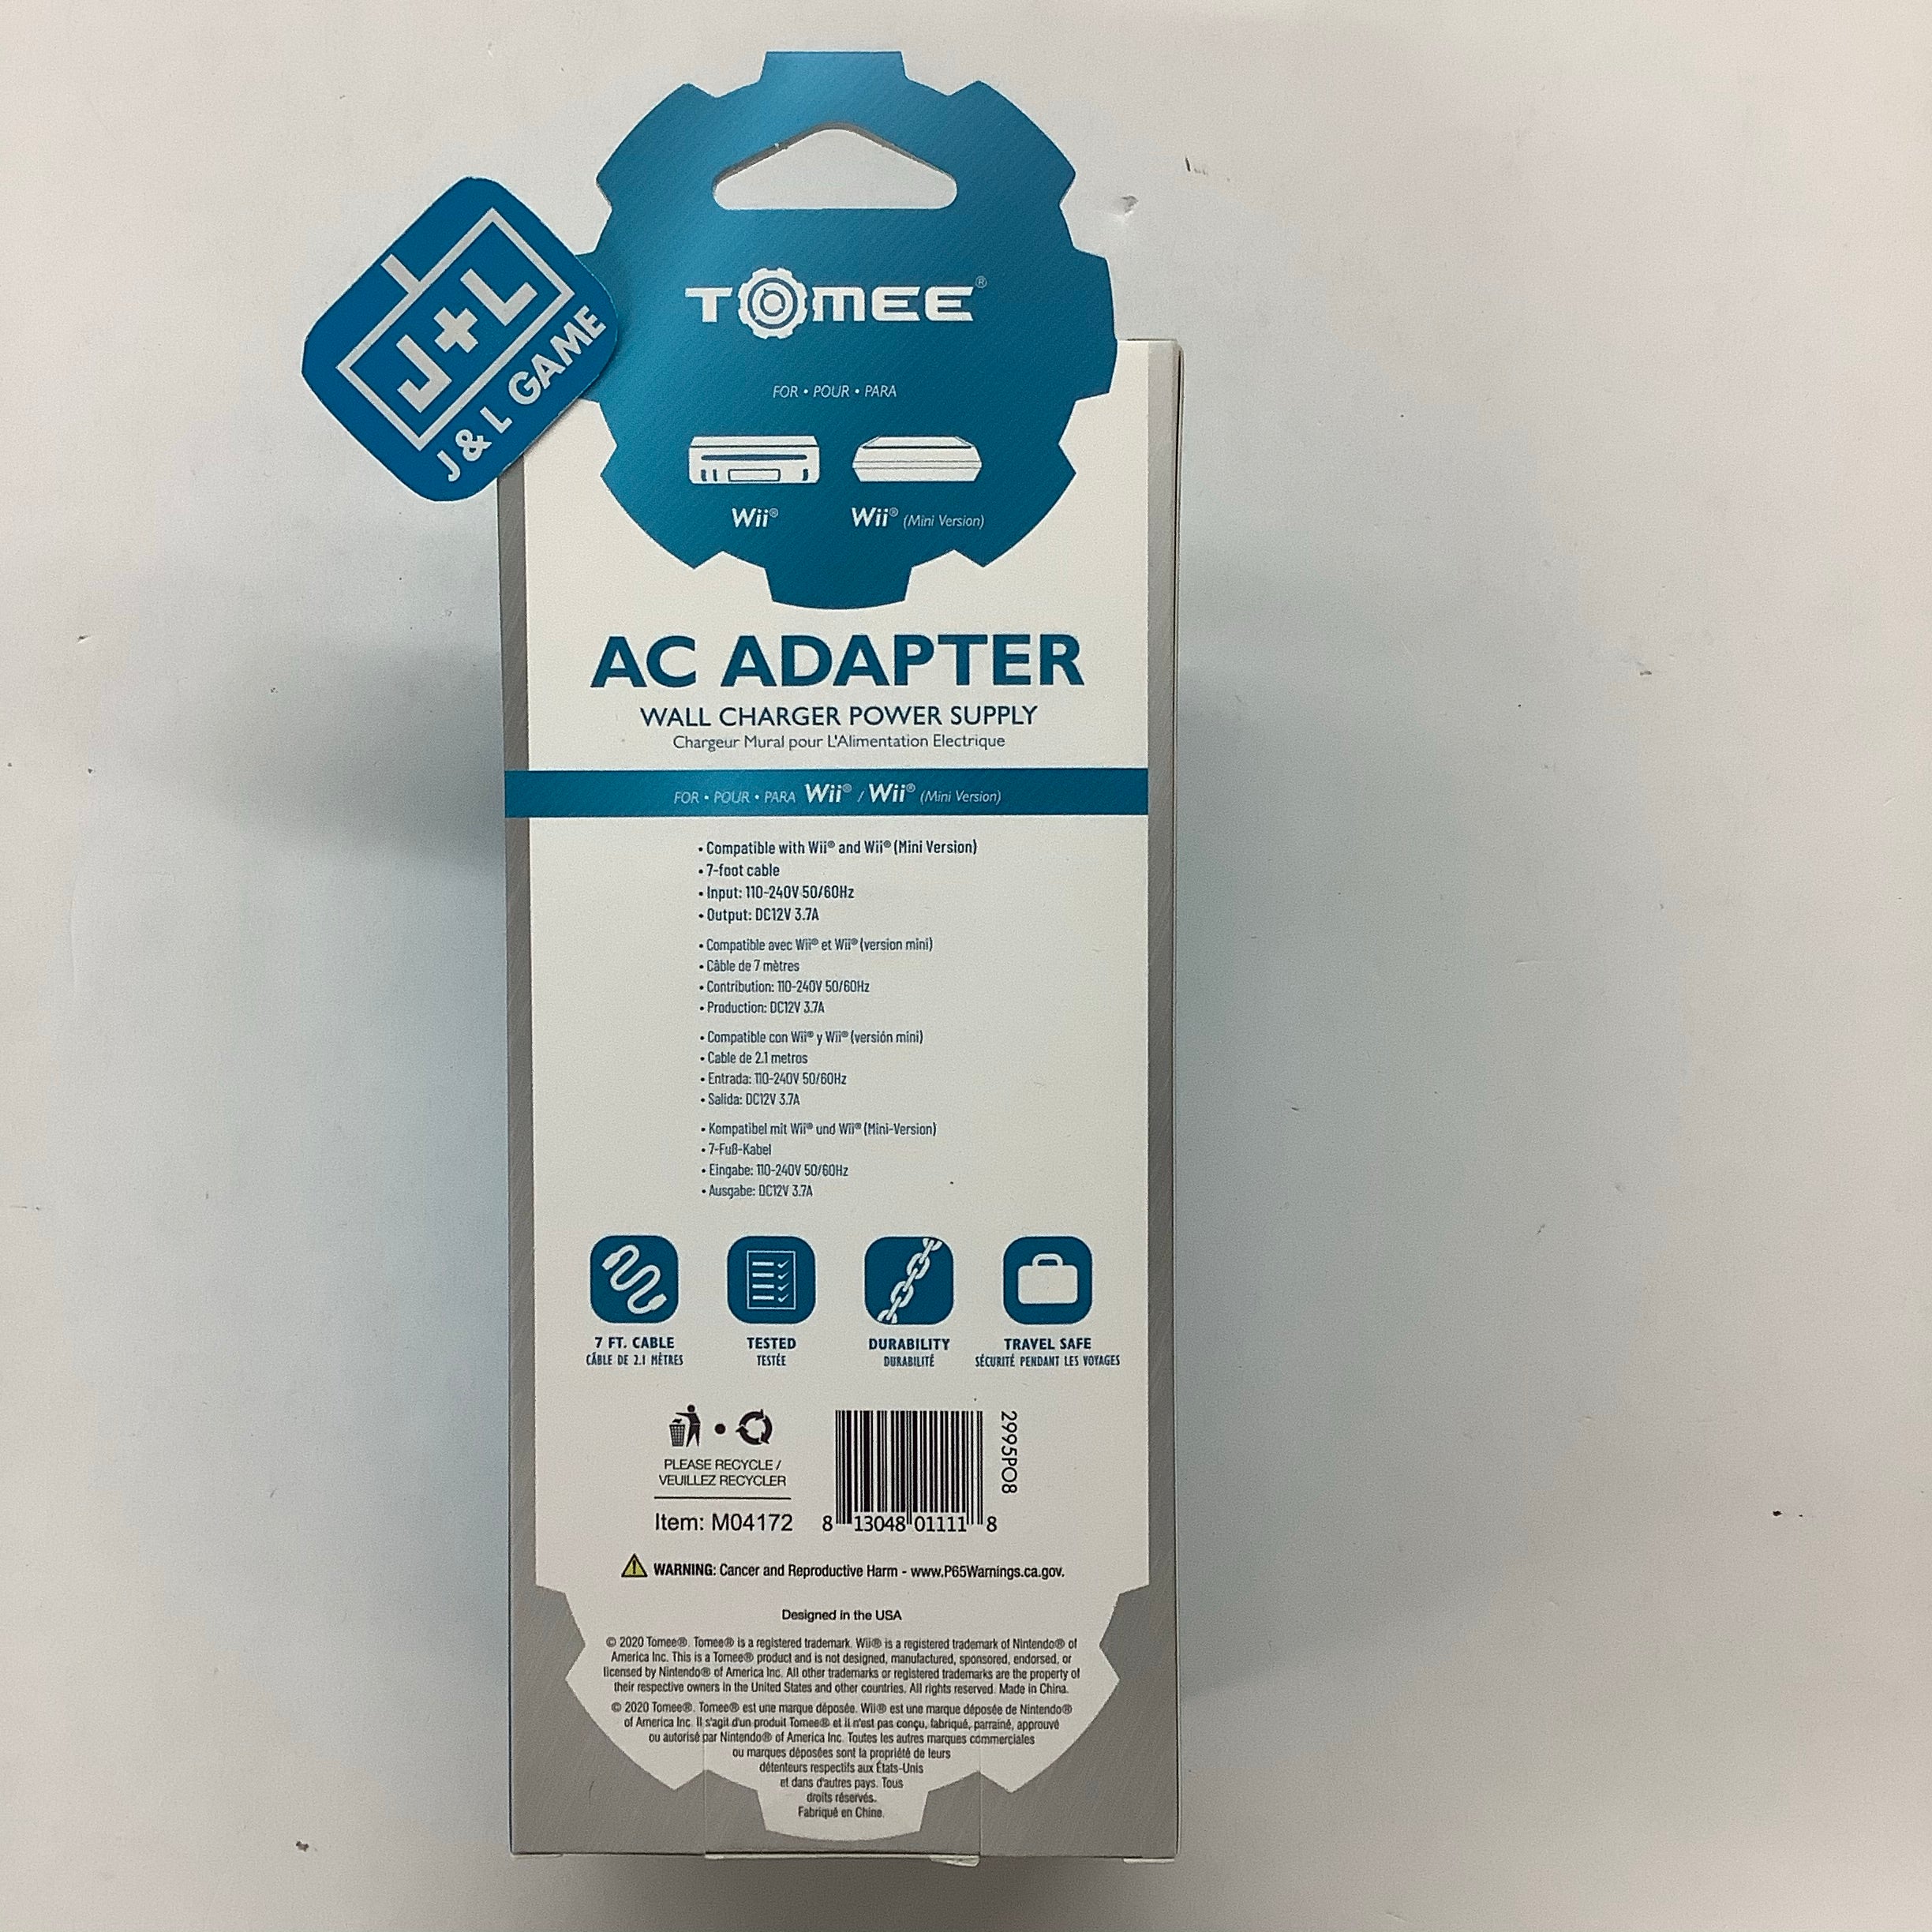 Tomee AC Adapter - Nintendo Wii Accessories Tomee   